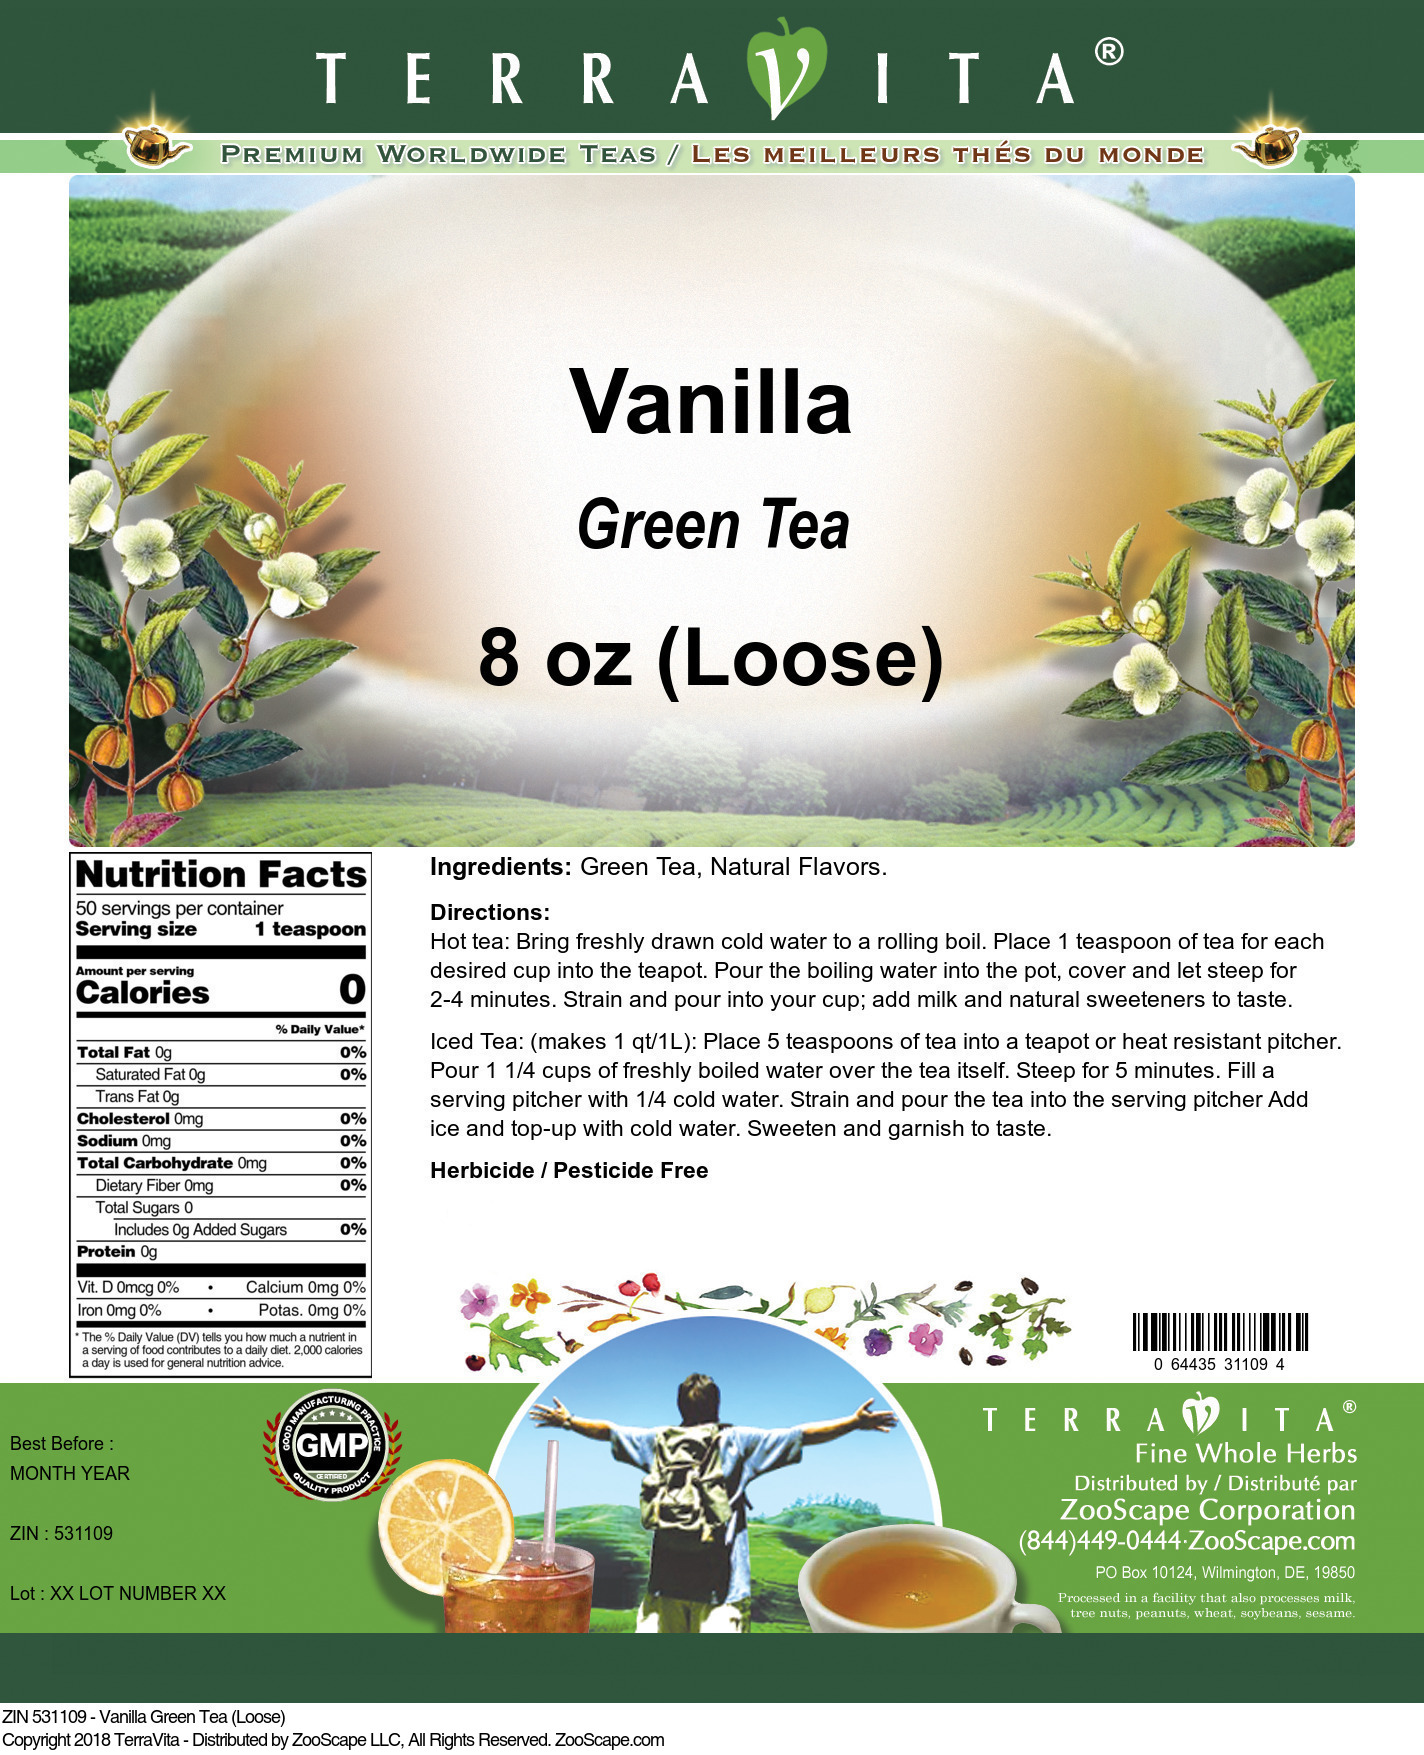 Vanilla Green Tea (Loose) - Label